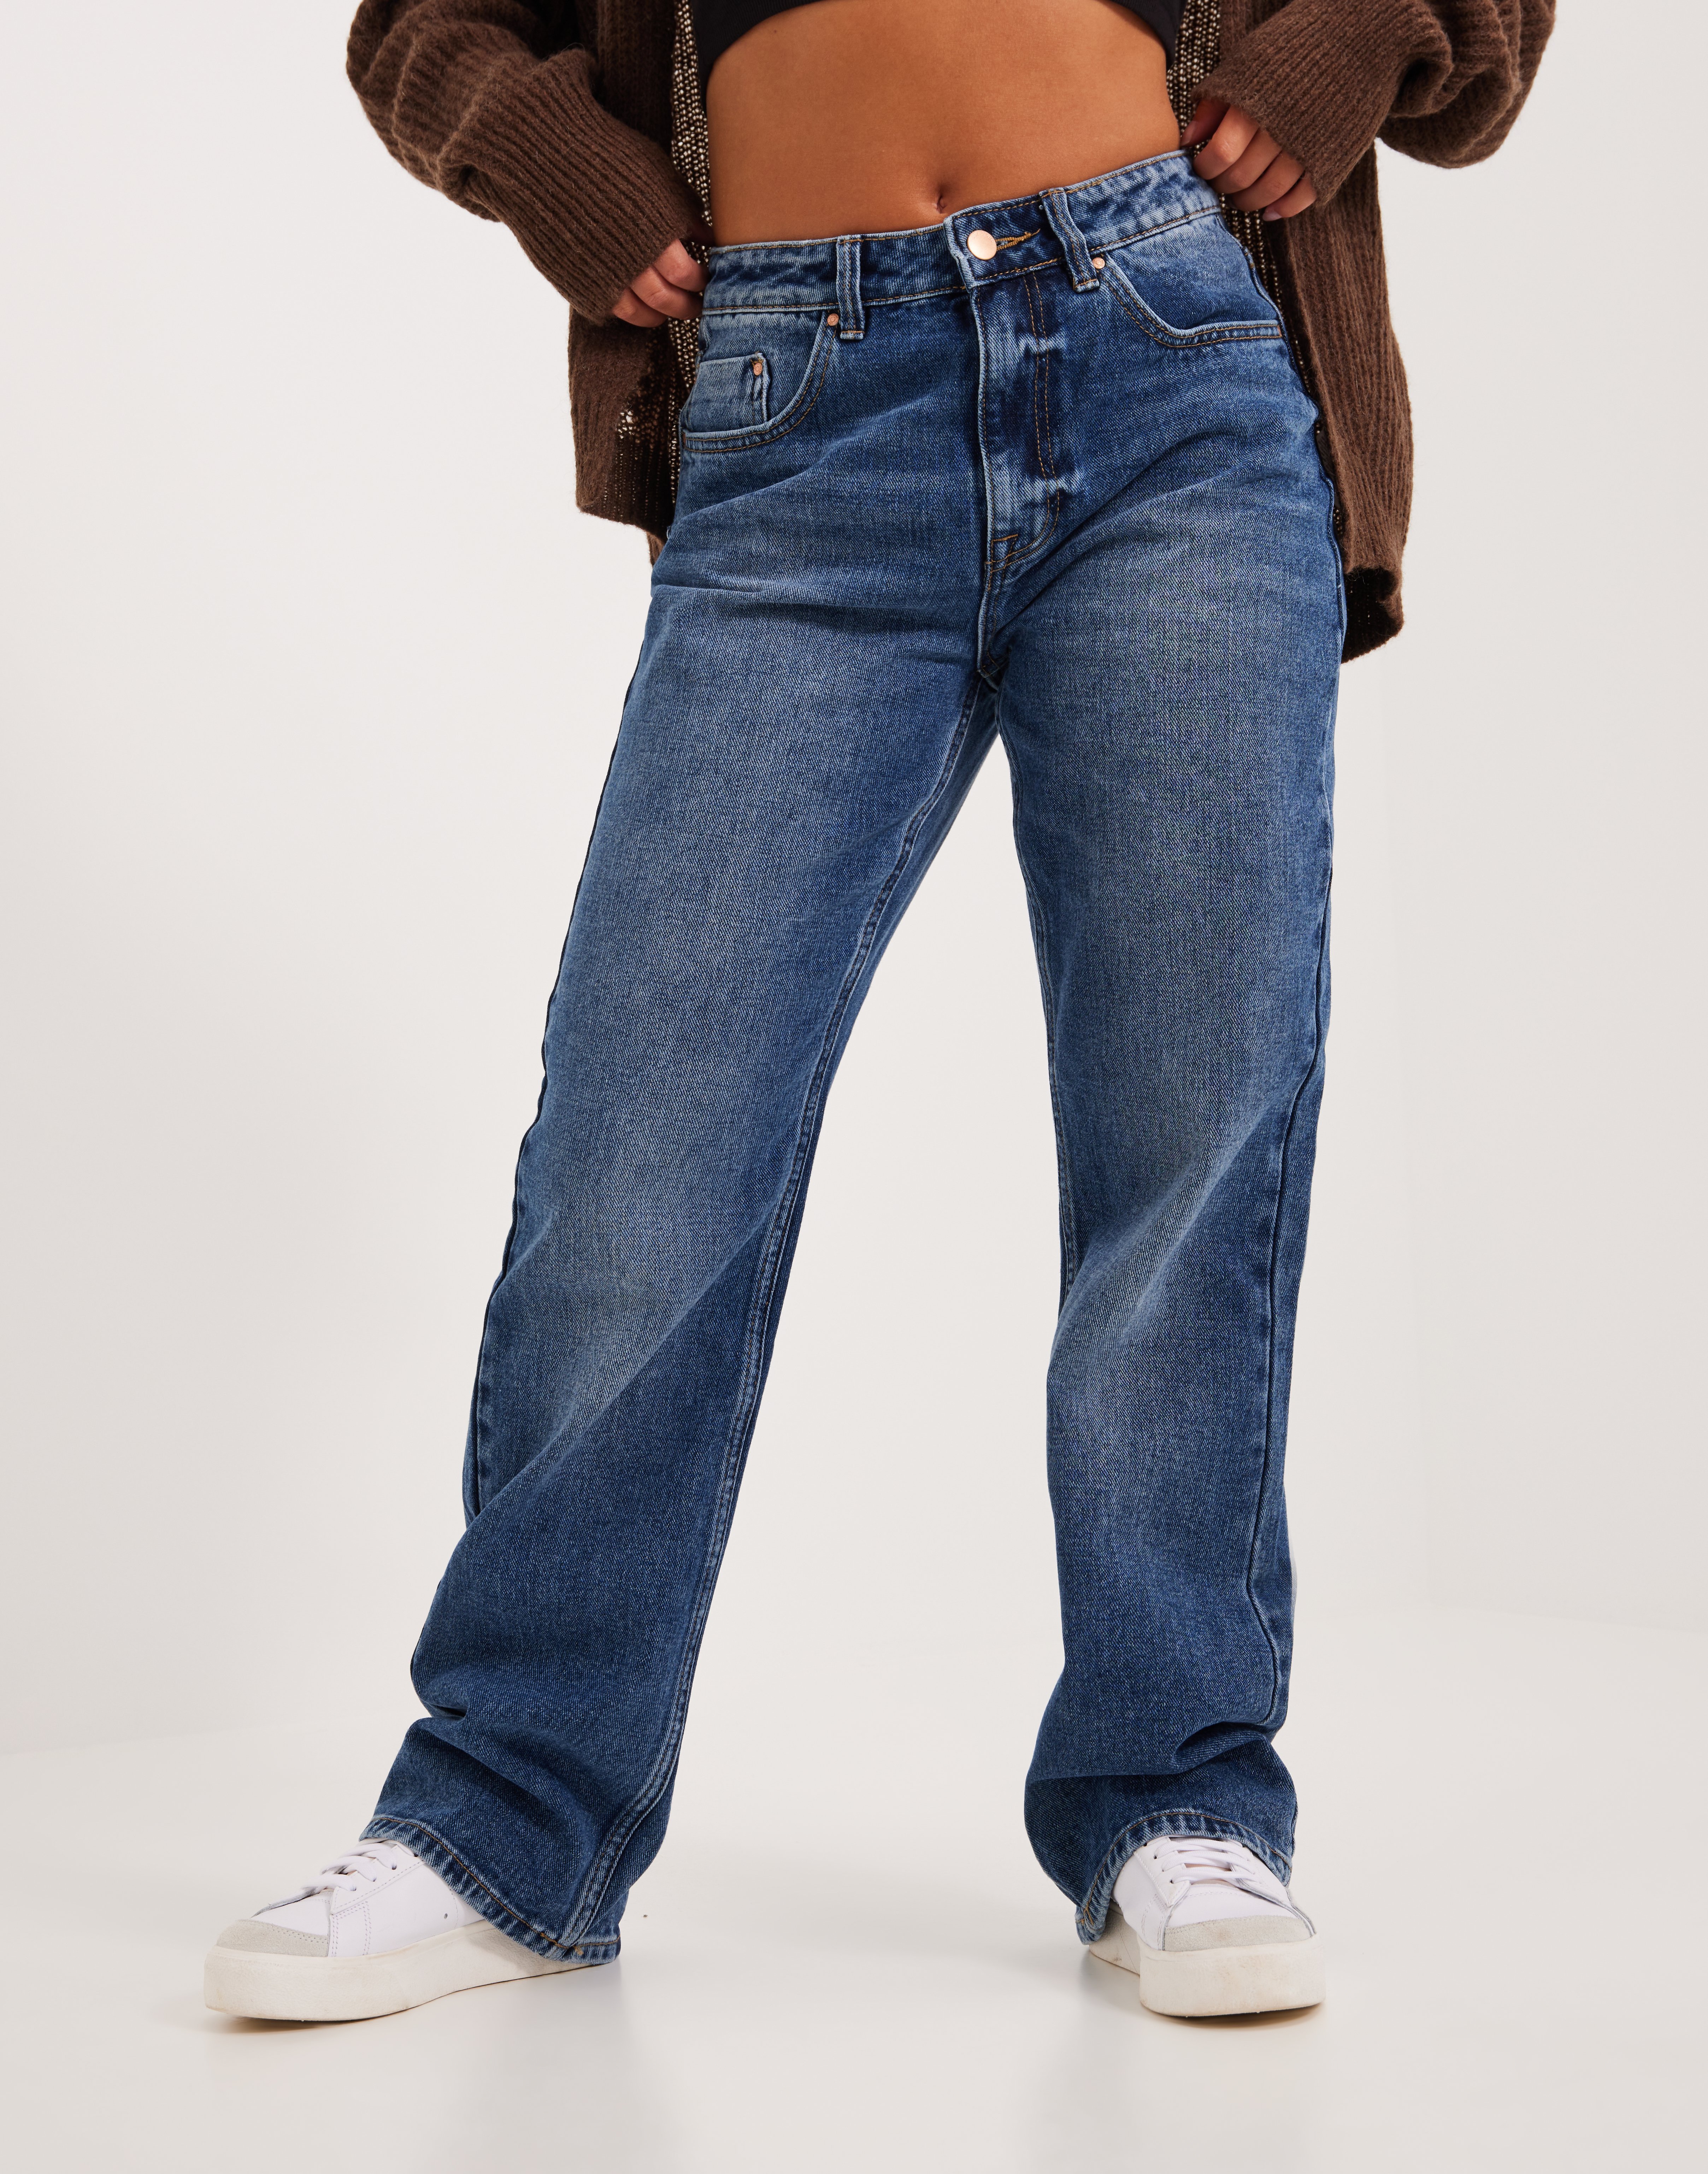 JdY - High waisted jeans - Jdydichte Hw Wide Db Dnm Noos - Jeans